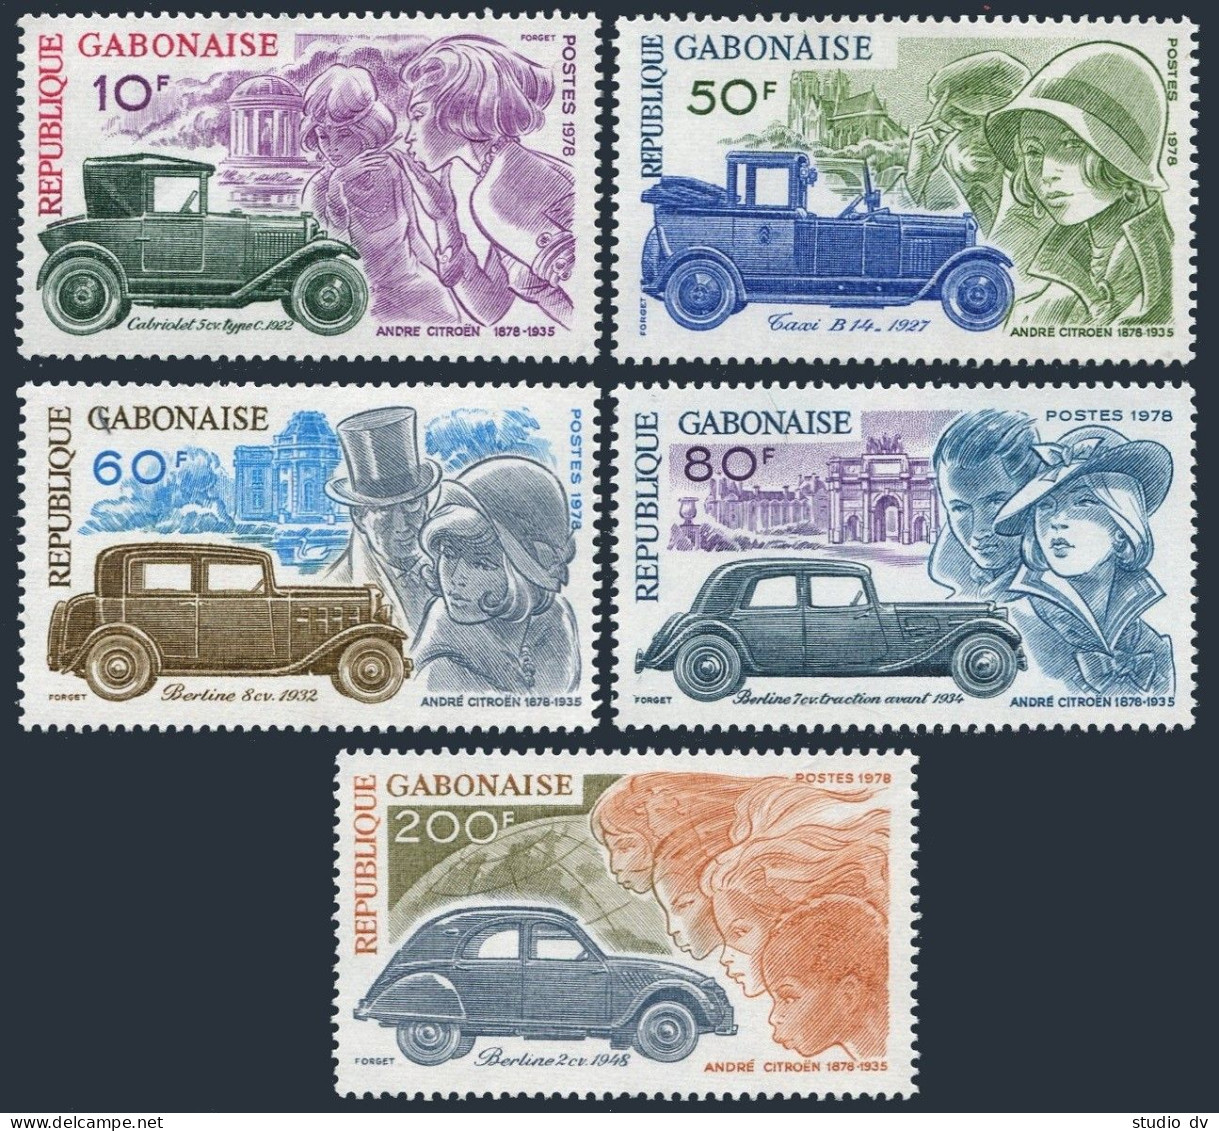 Gabon 395-399, MNH. Michel 652-656. Citroen Automobiles, 1978. - Gabon